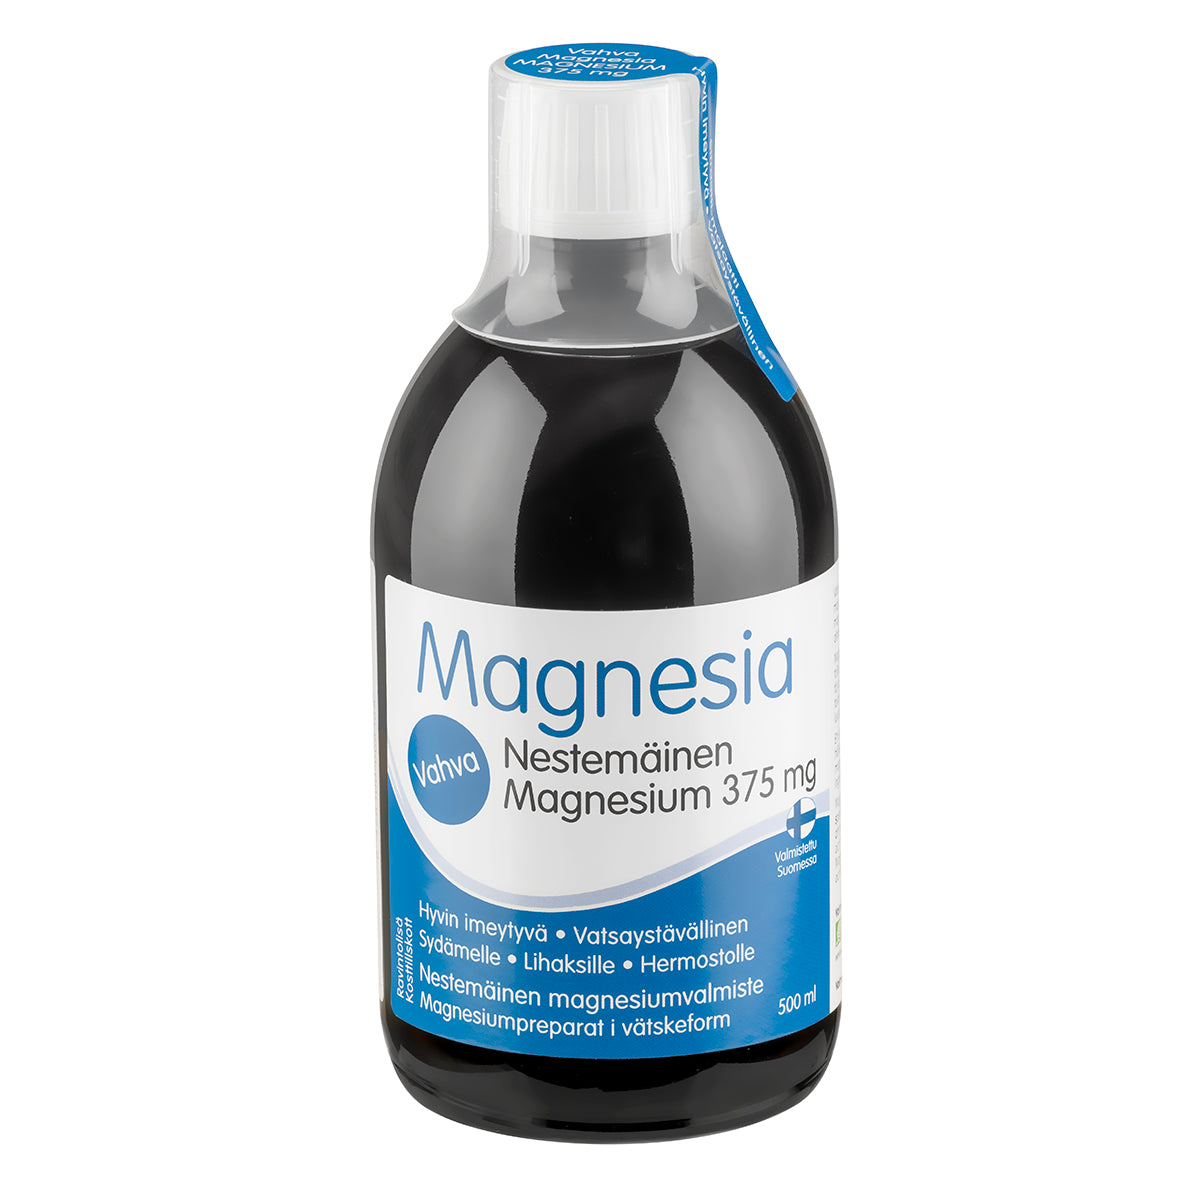 Magnesia Nestemäinen Magnesium 375 mg 500 ml - poistuu